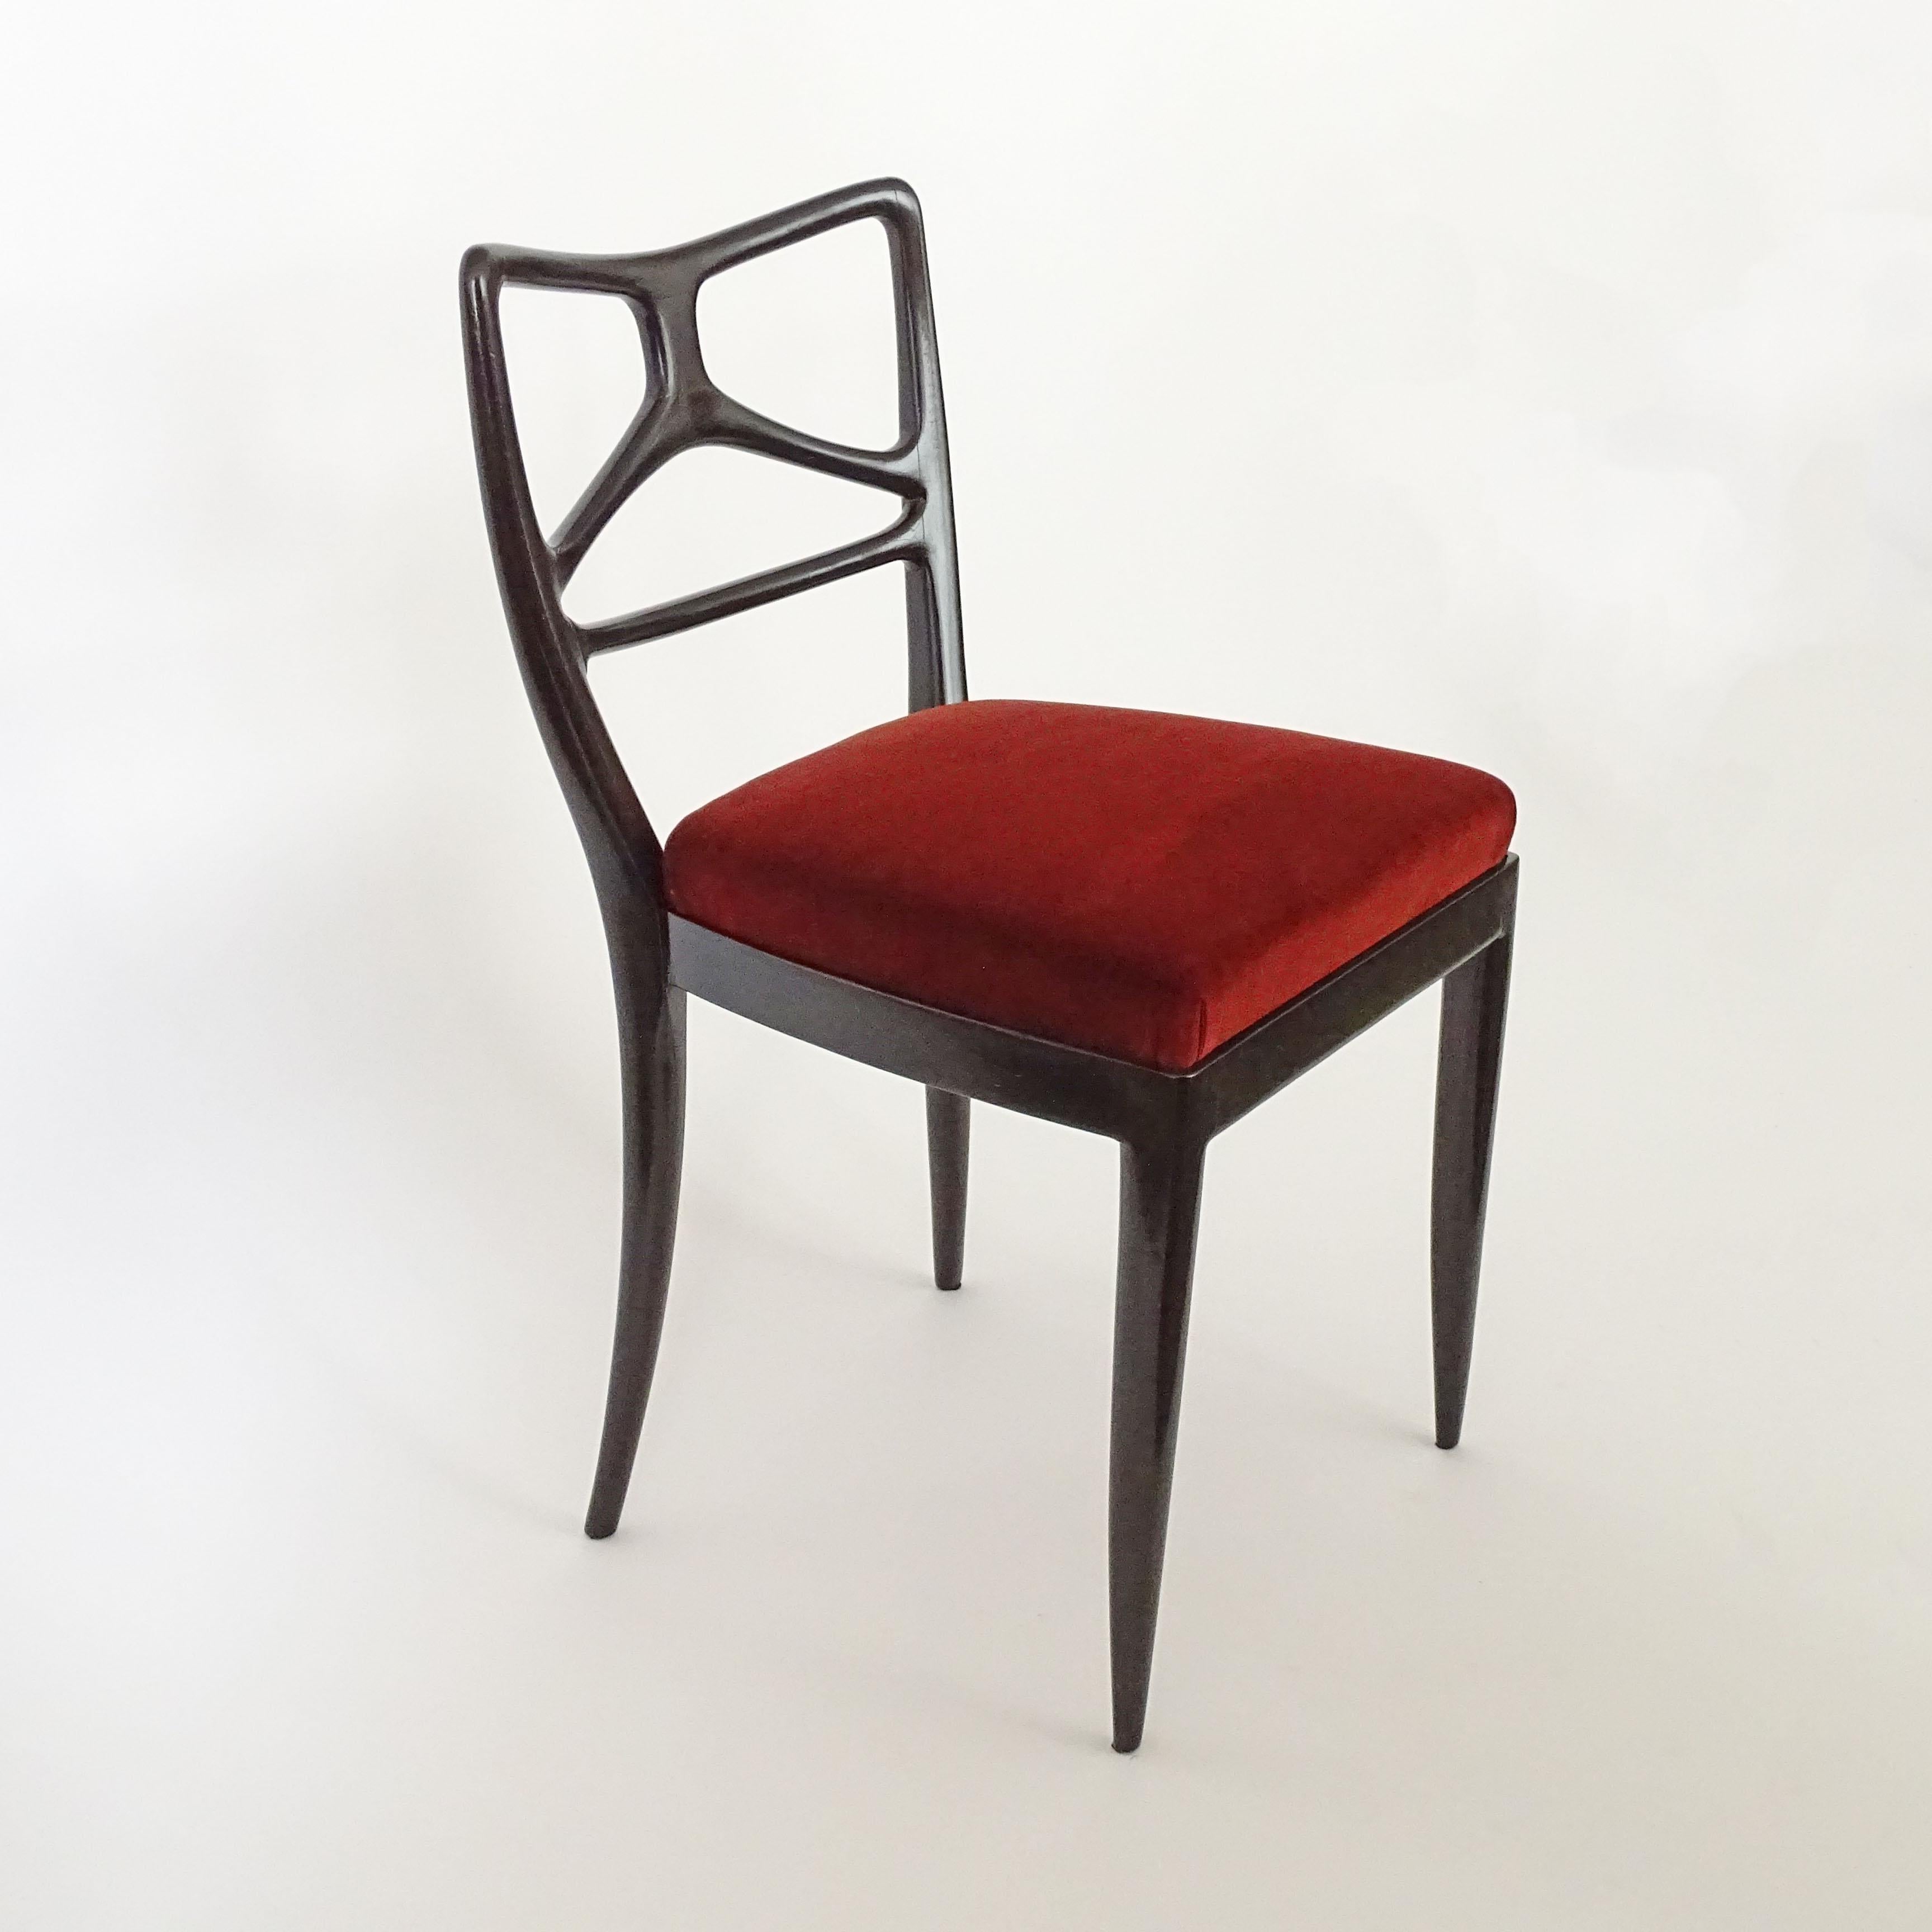 Spelndid sculptural Enrico Ciuti set of three chairs, Italy 1940s.